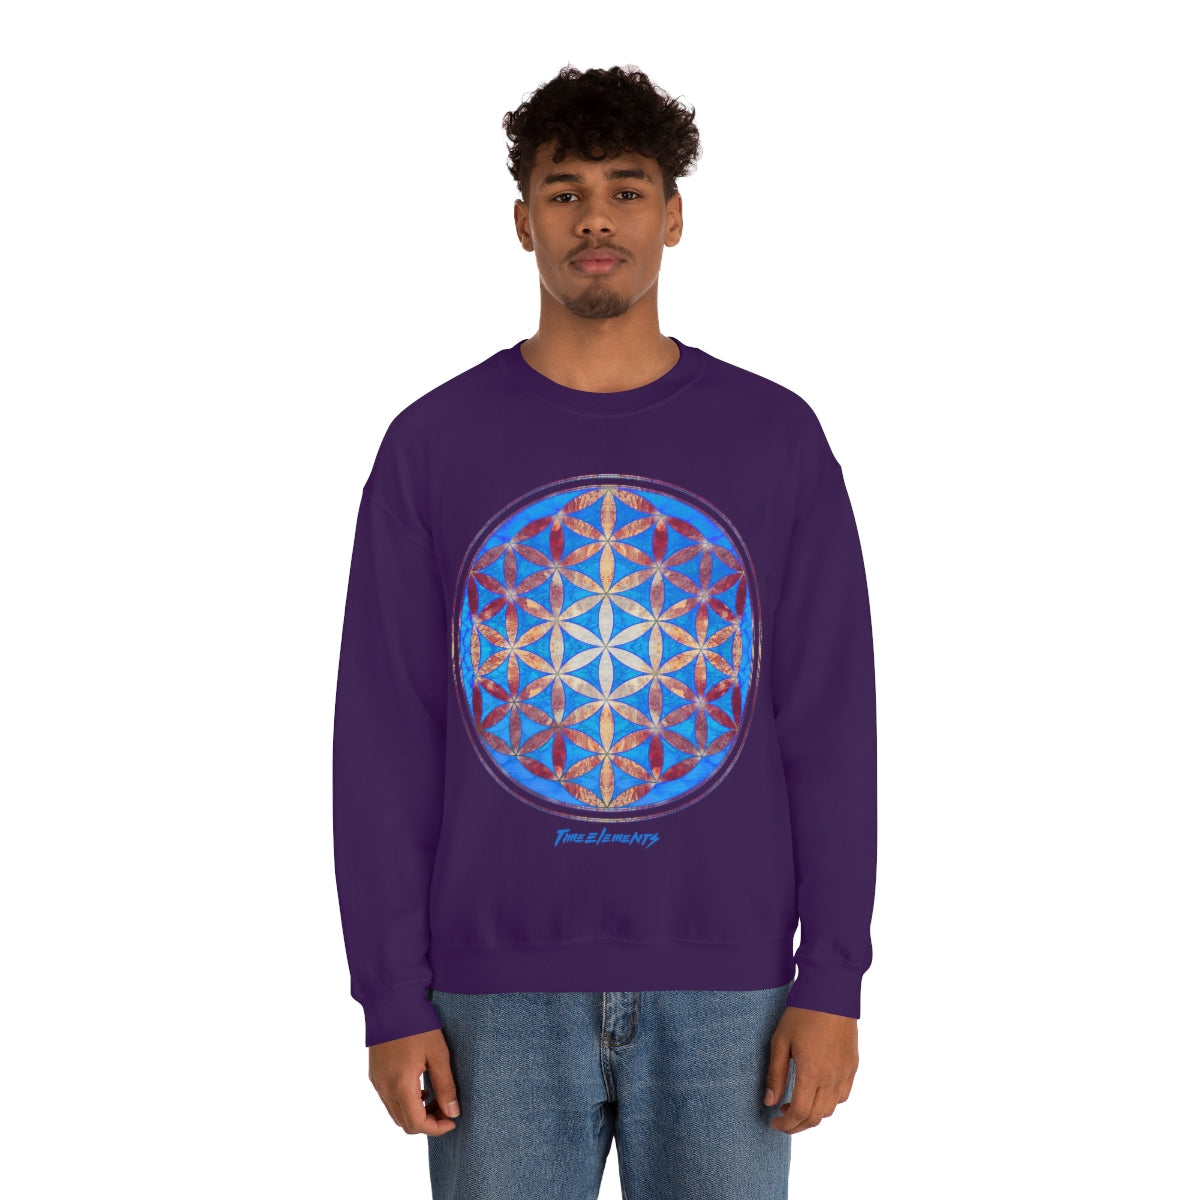 Flower of Life Magenta Blue | Sacred Geometry Sweatshirt